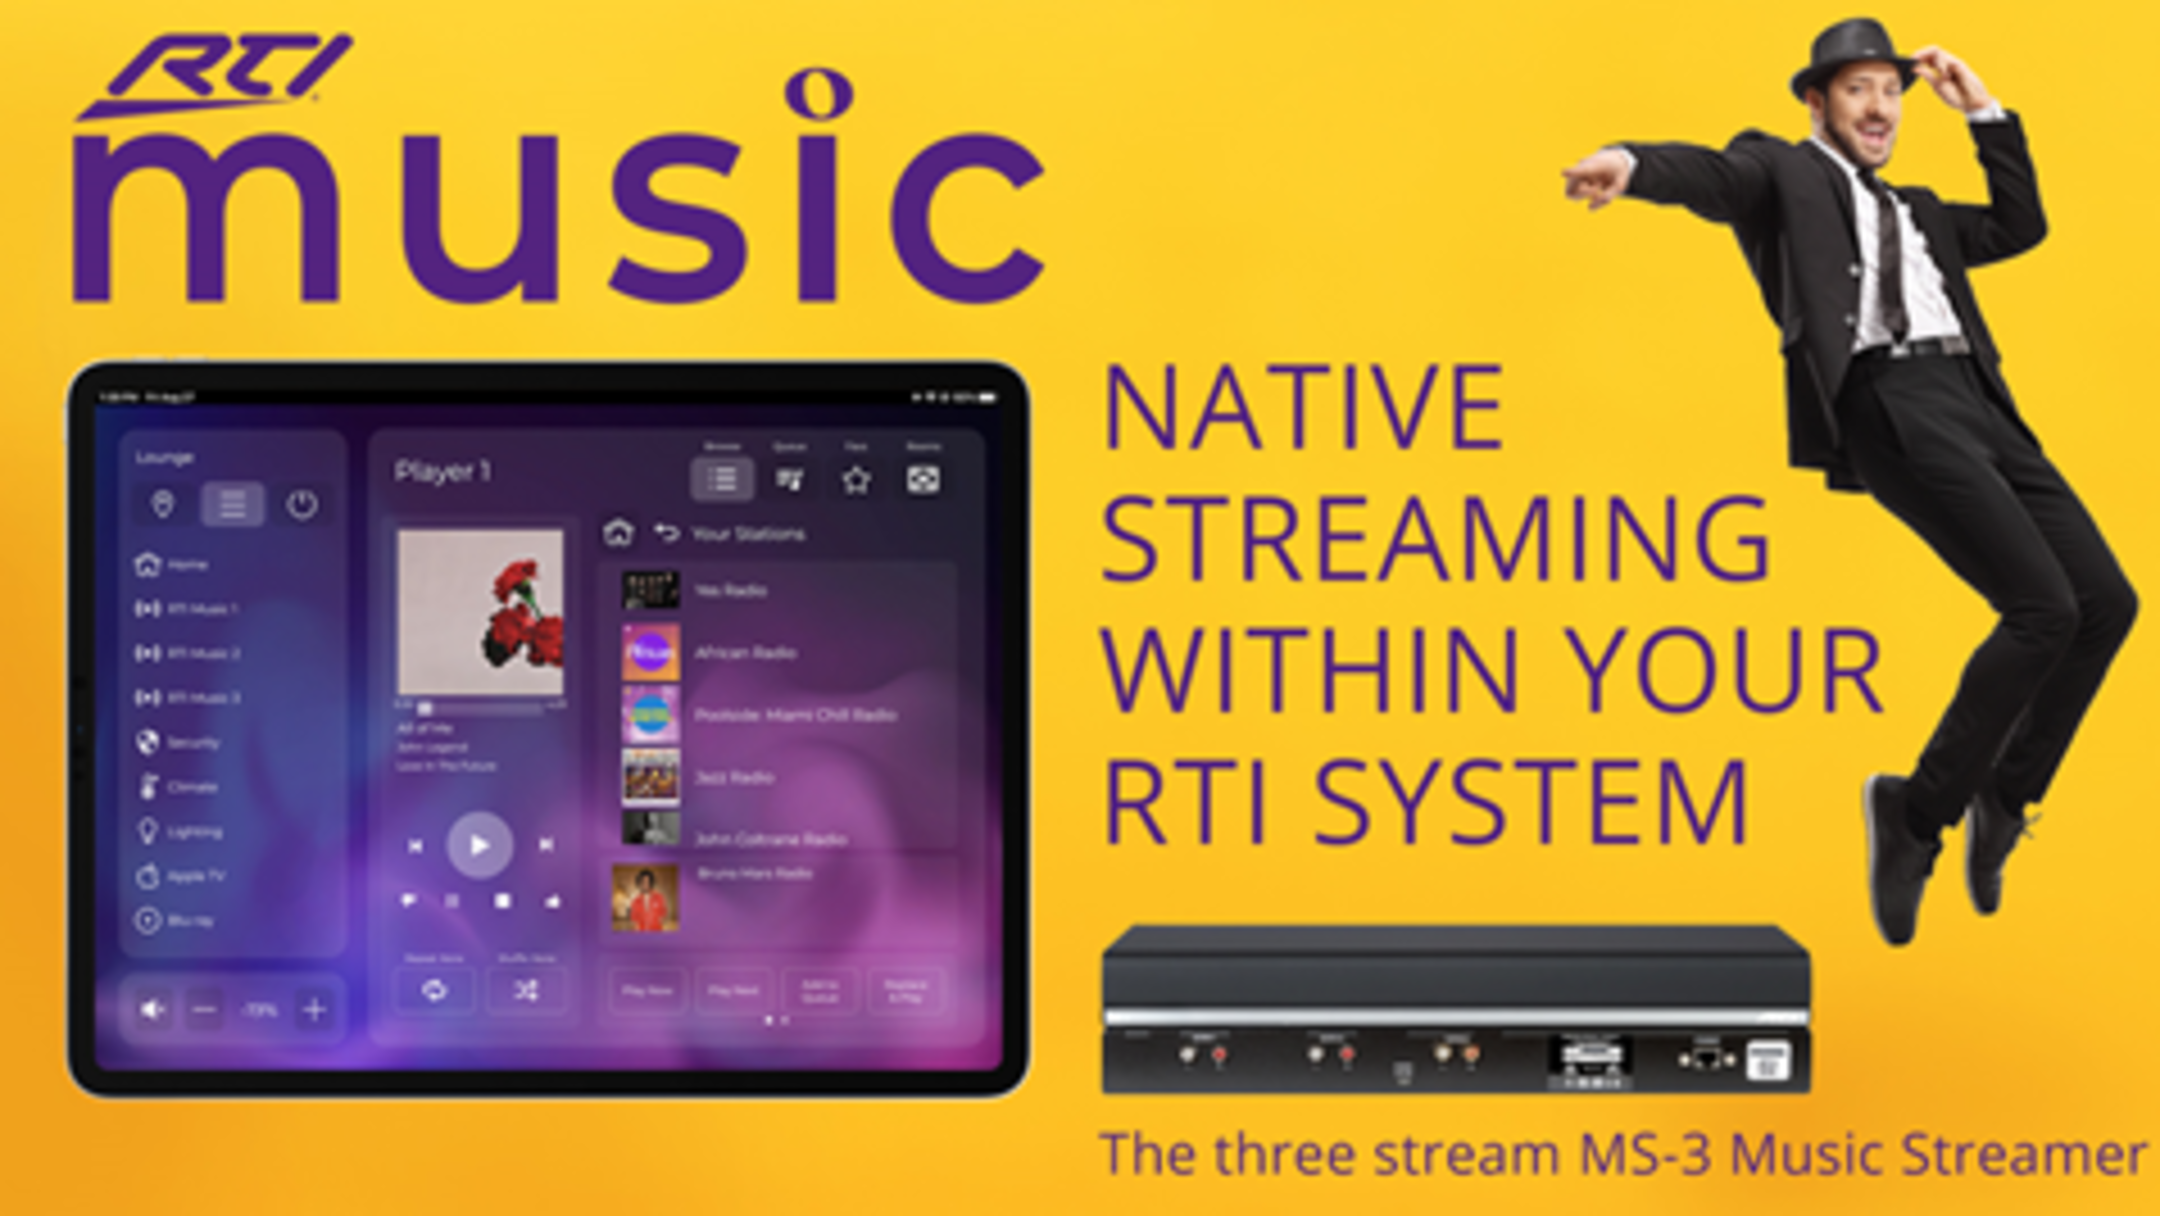 MS-1 Music Streamer